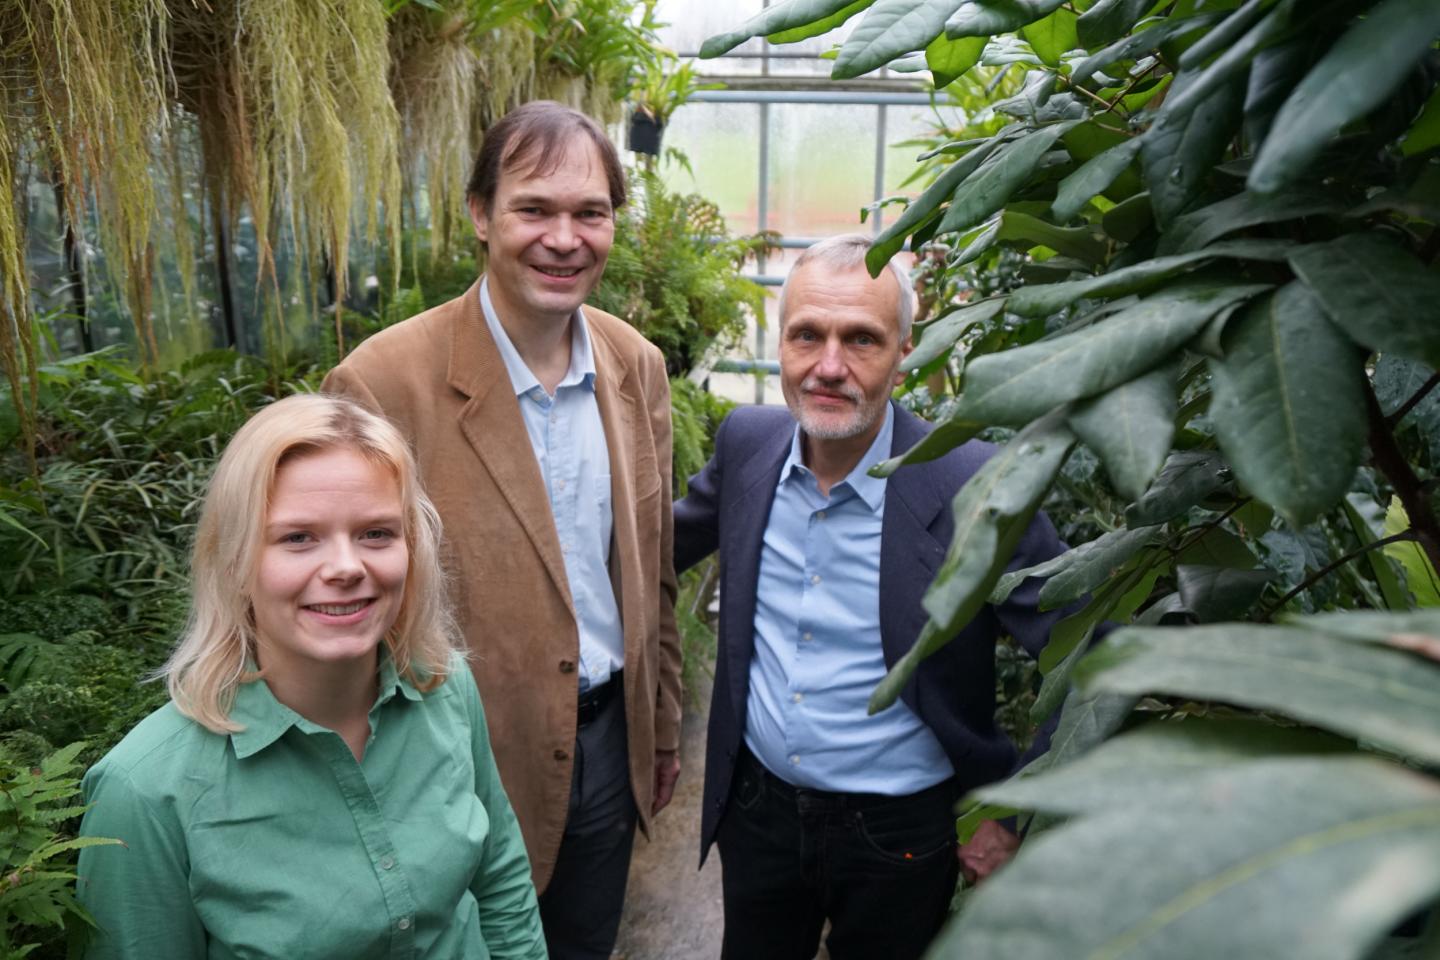 Jana Löwe, Professor Dr Harald Gröger, and Professor Dr Karl-Josef Dietz